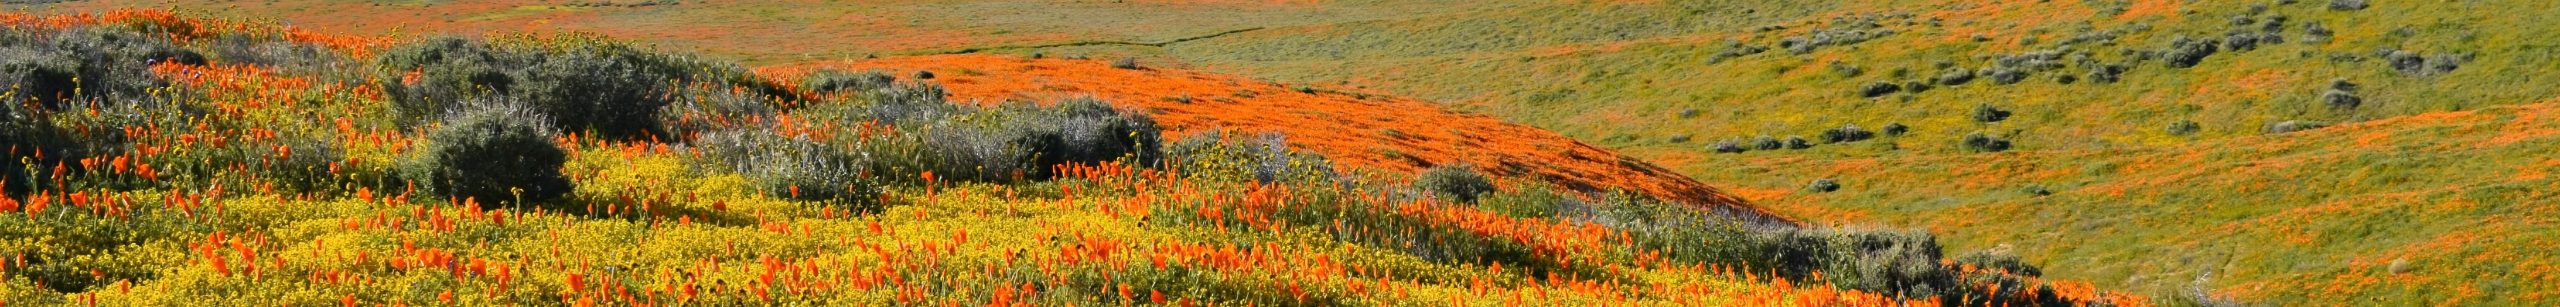 pamela-heckel-blBcRs-WSdM-unsplash Antelope valley california poppy reserve, usatrim